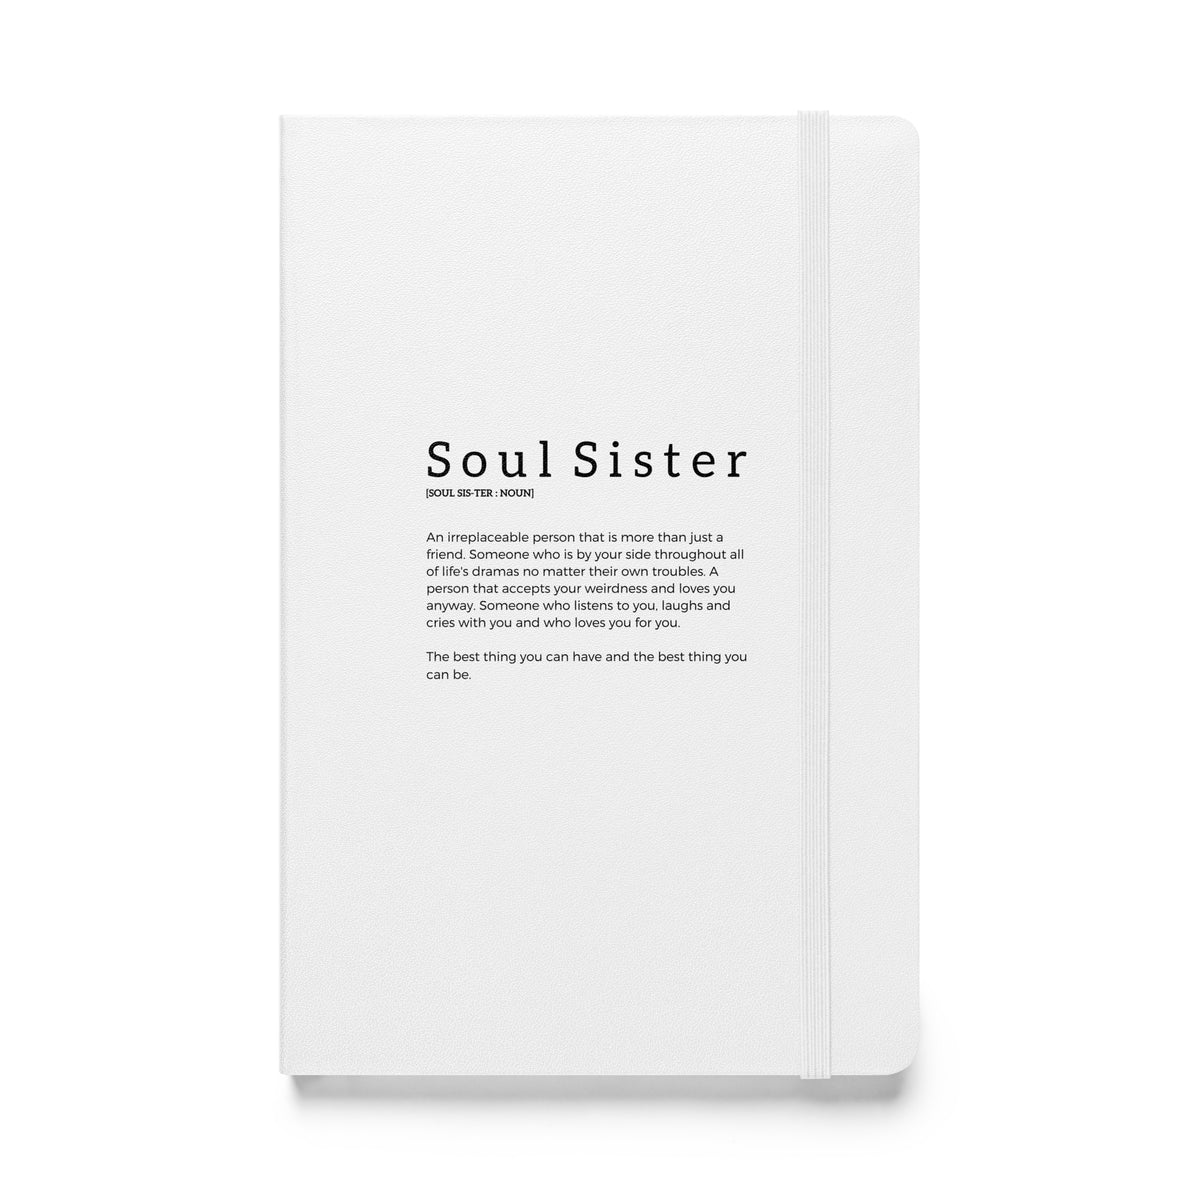 Soul sister